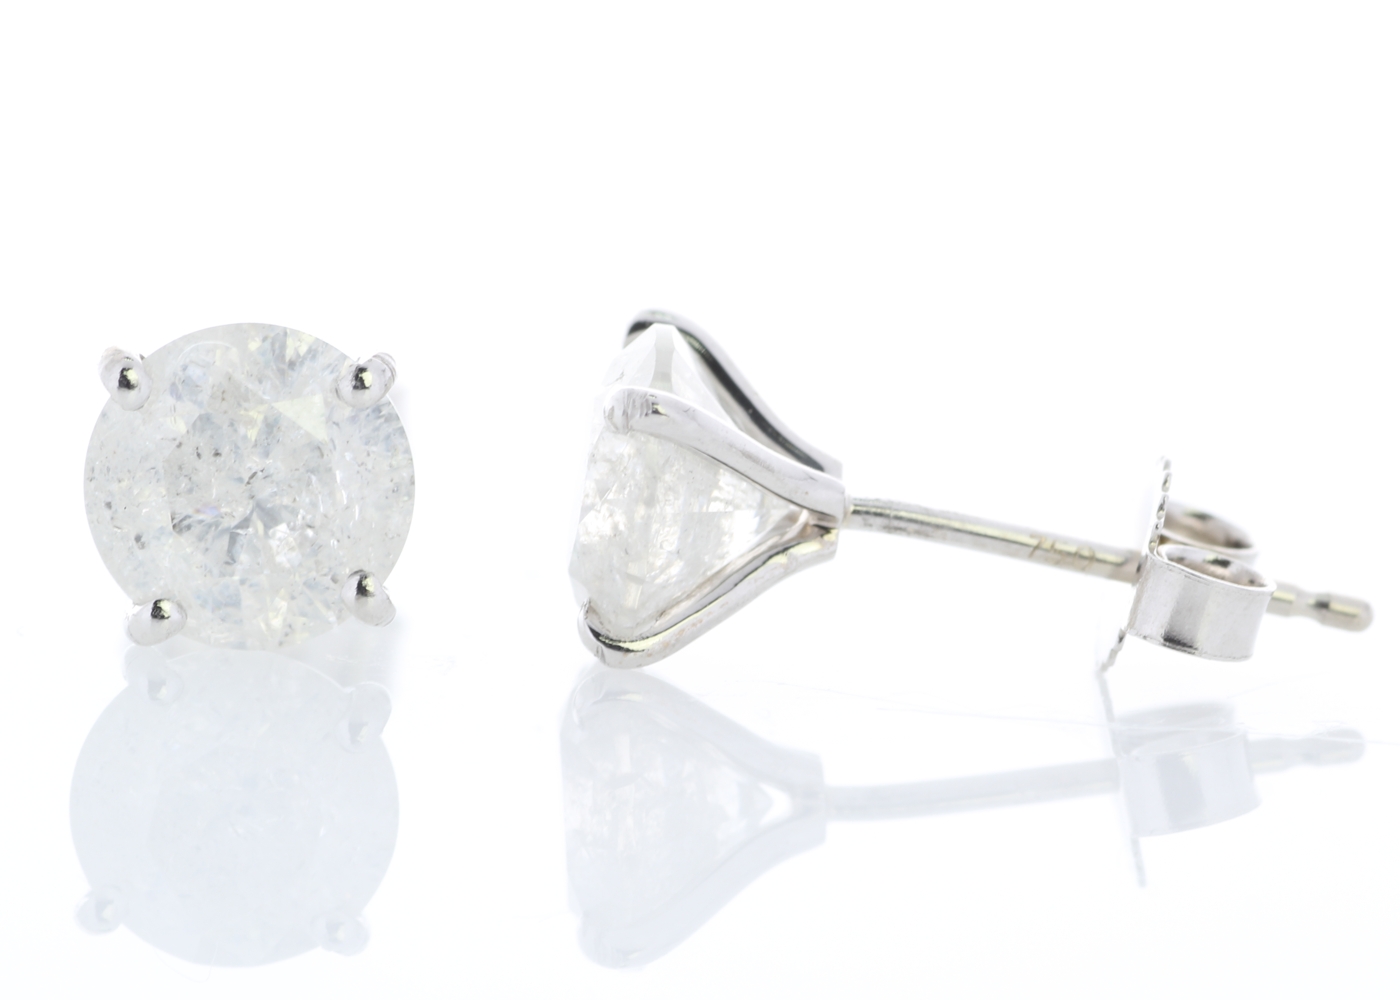 18ct White Gold Prong Set Diamond Earrings 2.26 Carats - Image 2 of 3